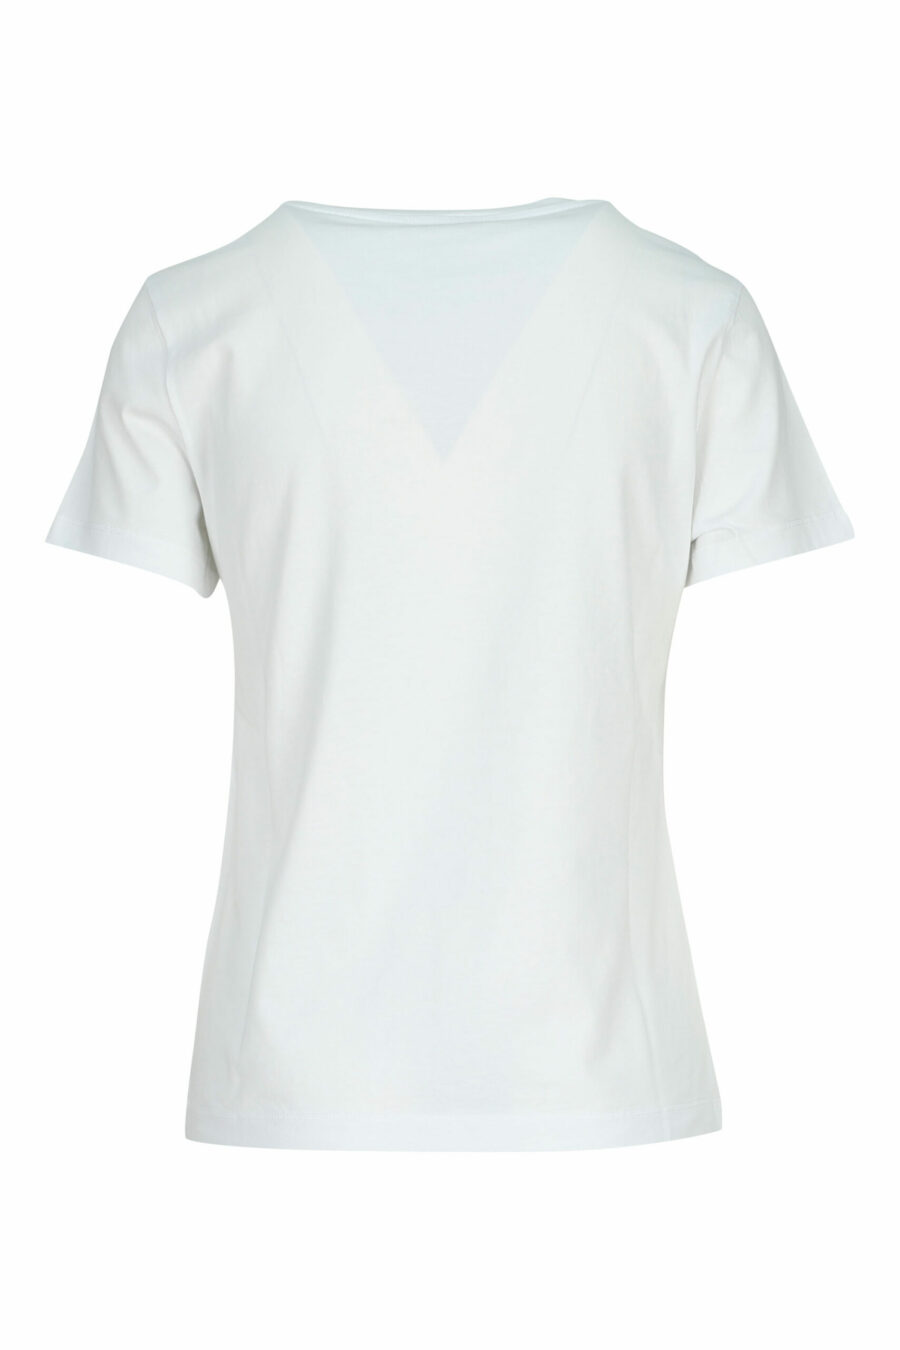 White T-shirt with mini logo "kenzo boke flower" white - 3612230587748 1 scaled